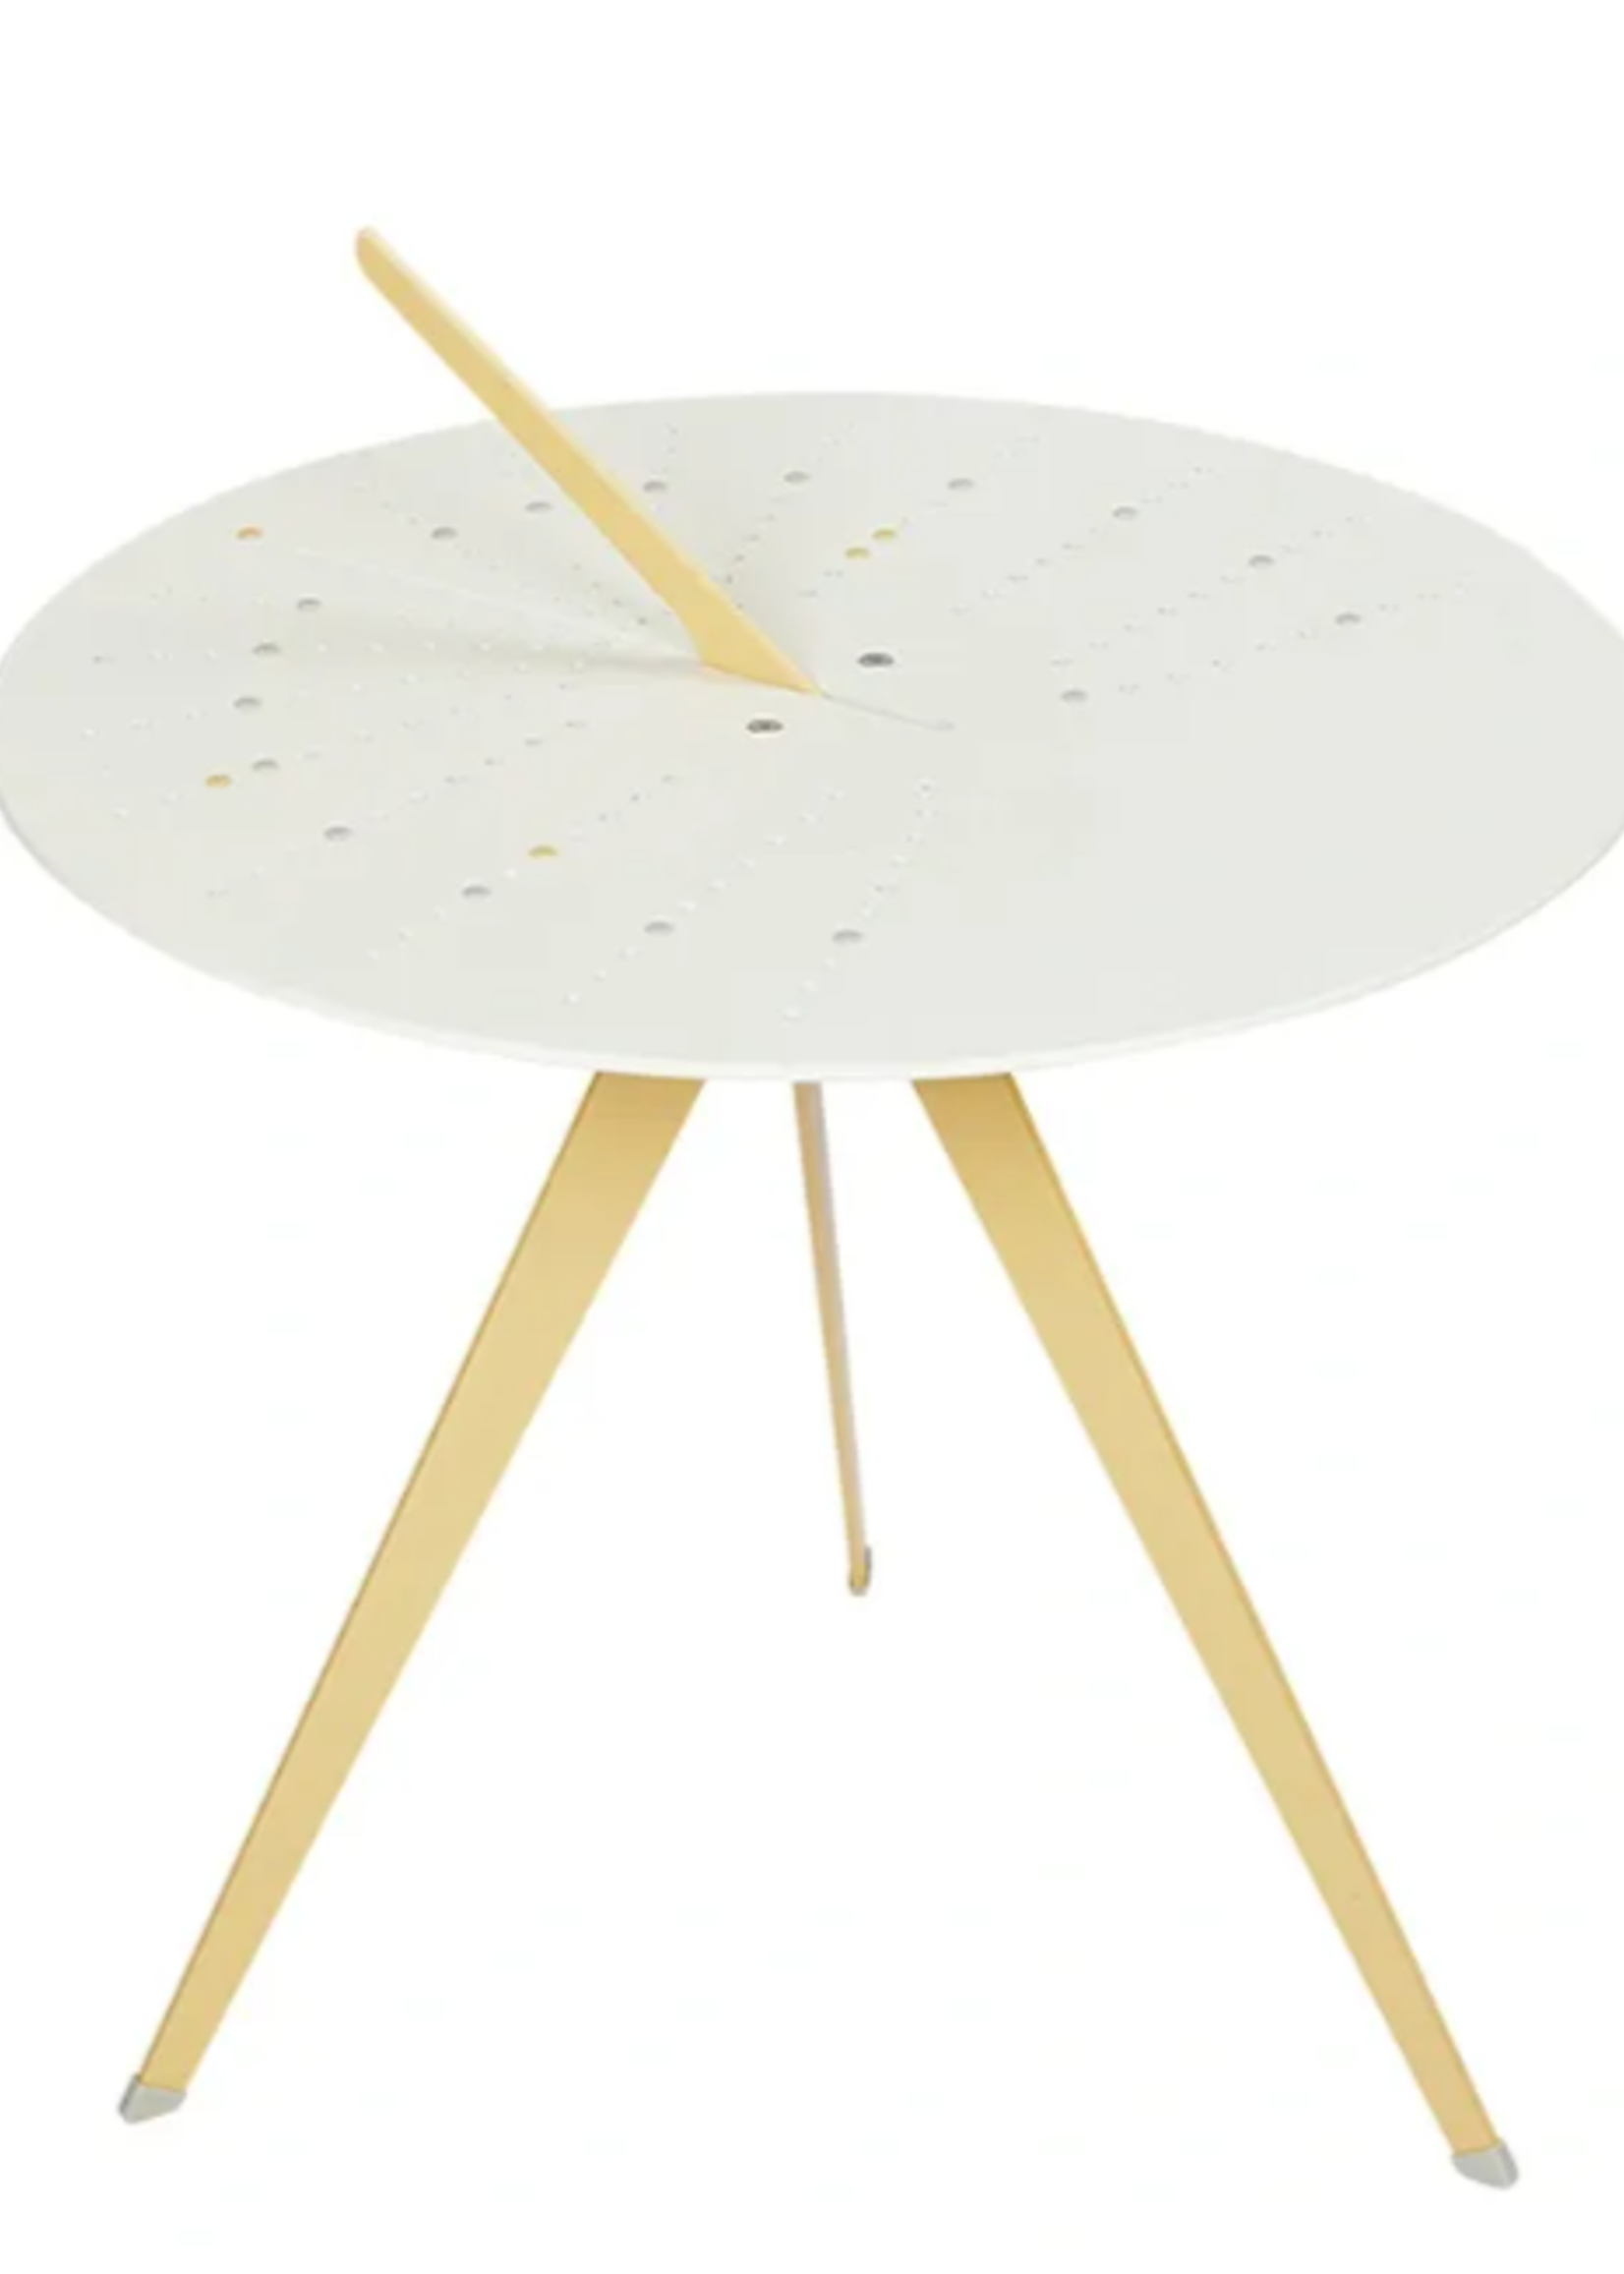 Weltevree Weltevree - Sundial Table - Cadran solaire et table d'appoint - Jaune sable